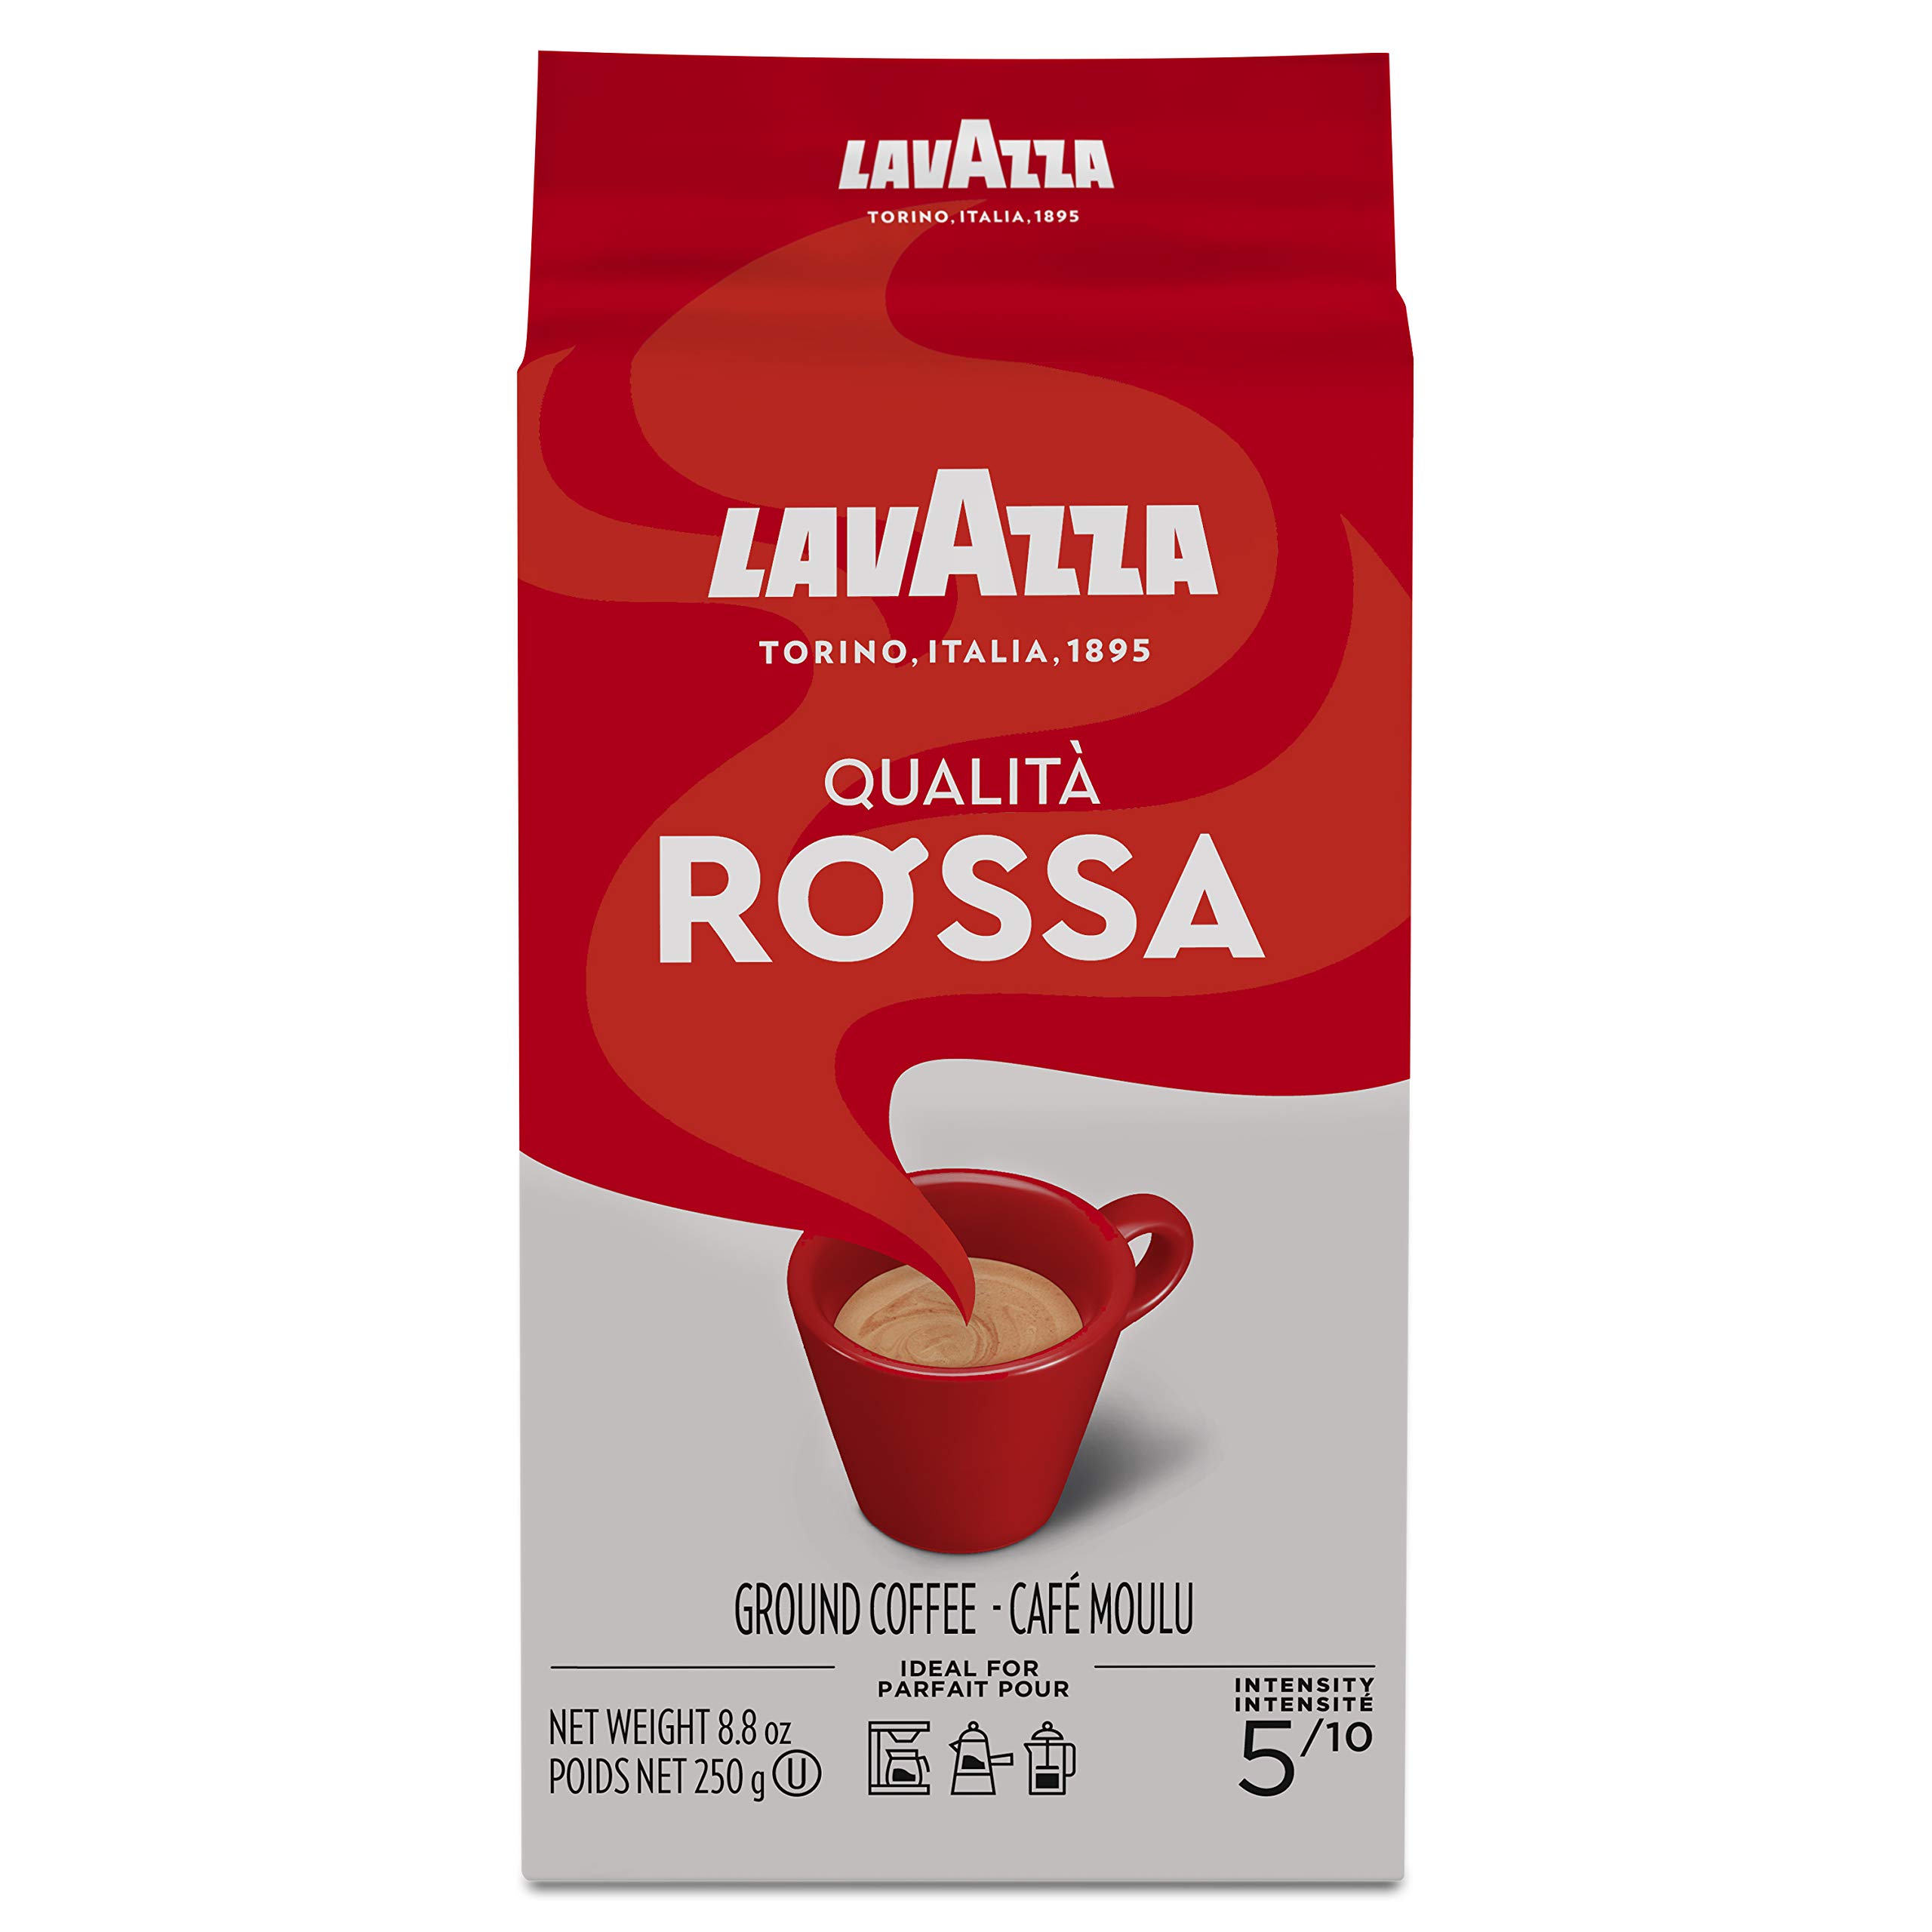 4-Pack 8.8-Oz Lavazza Qualita Rossa Ground Coffee Blend (Medium Roast) $6.50 w/ S&S + Free Shipping w/ Prime or on $35+